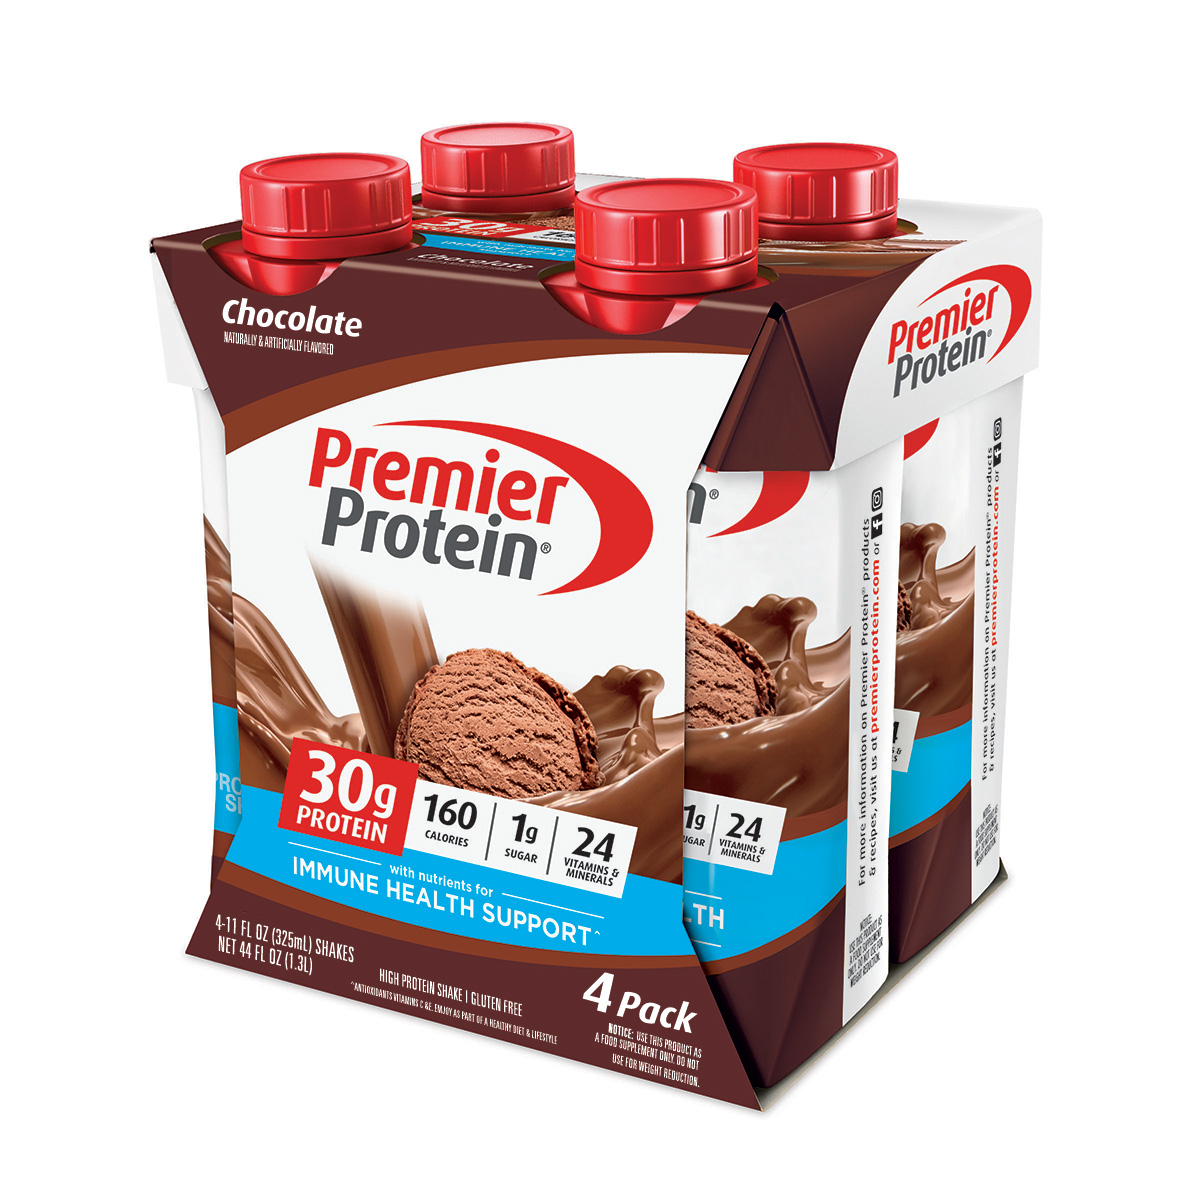 Premier Protein Shake, Chocolate, 30g Protein, 11 fl oz, 4 Ct - image 1 of 7